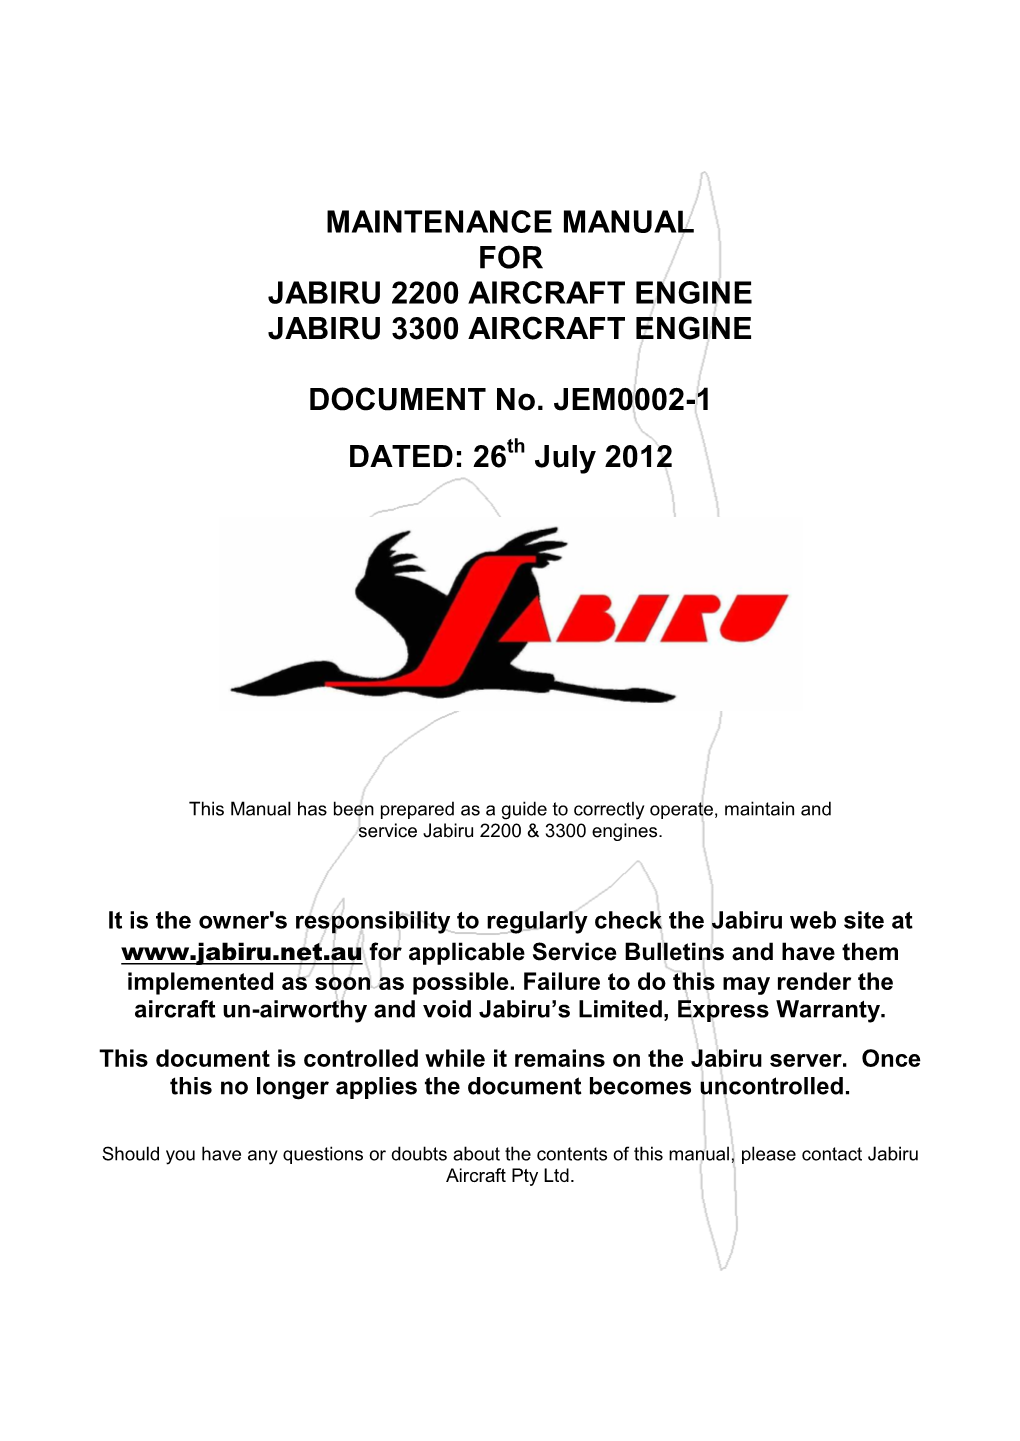 Maintenance Manual for Jabiru 2200 Aircraft Engine Jabiru 3300 Aircraft Engine